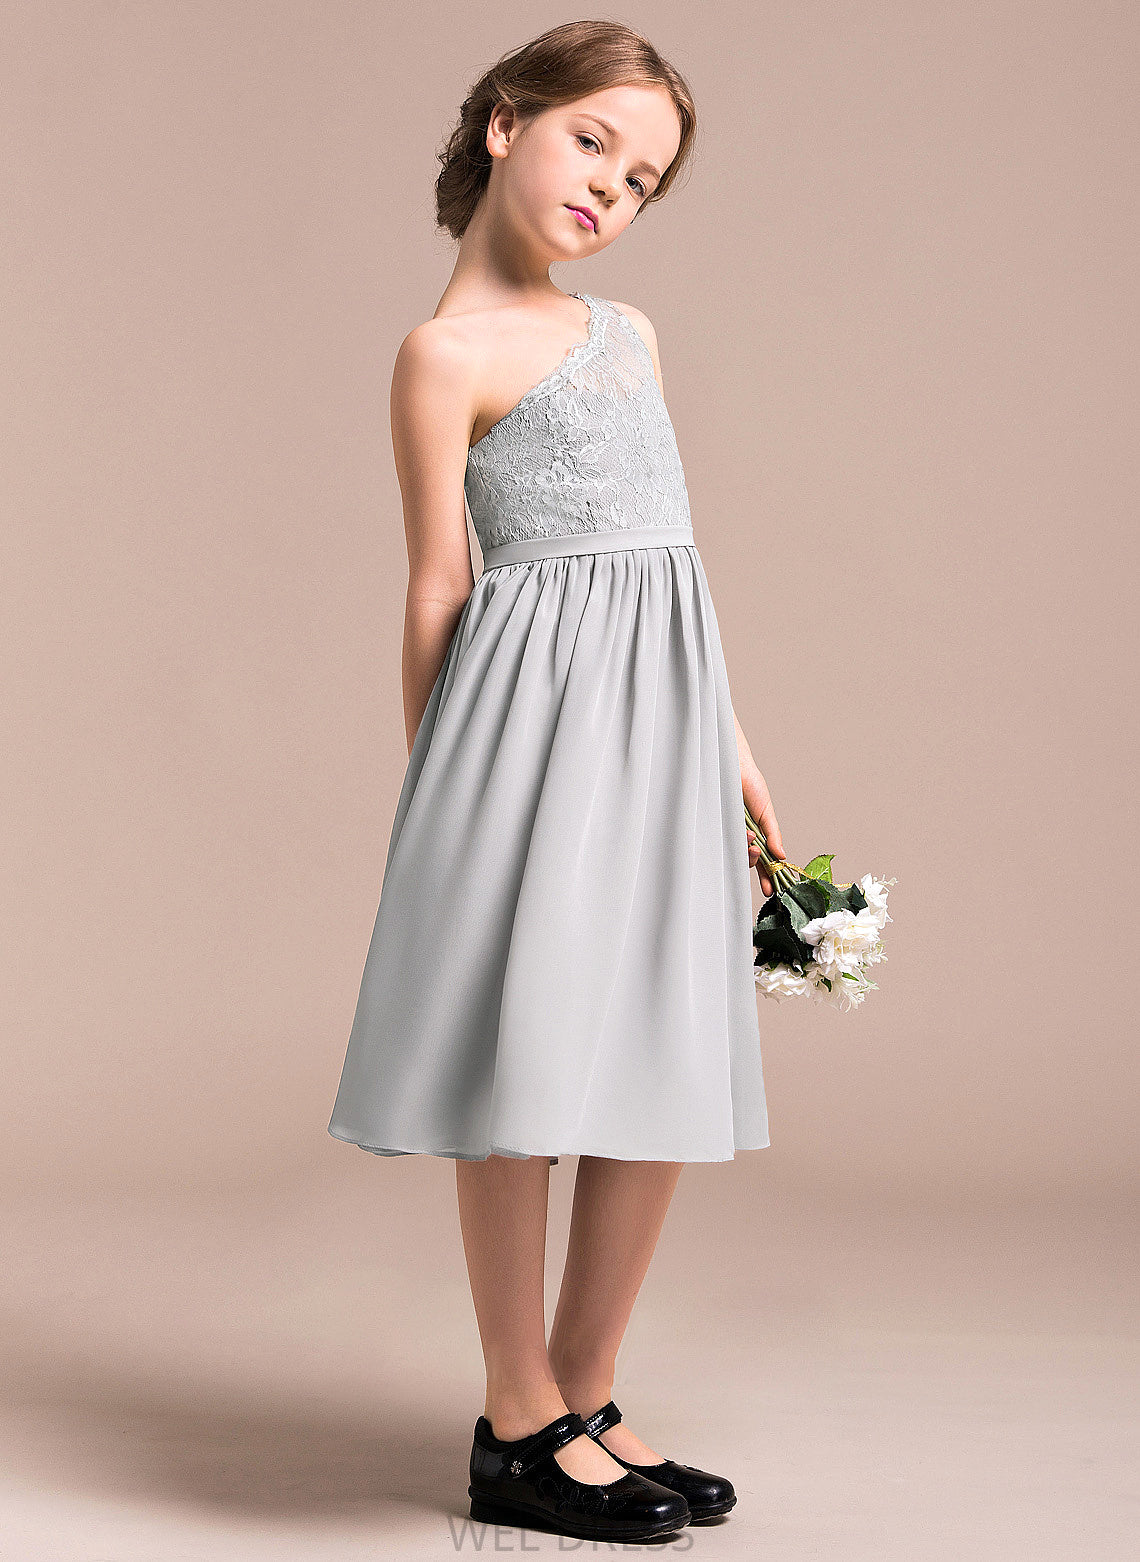 Lace One-Shoulder Junior Bridesmaid Dresses A-Line Knee-Length Chiffon Abbigail